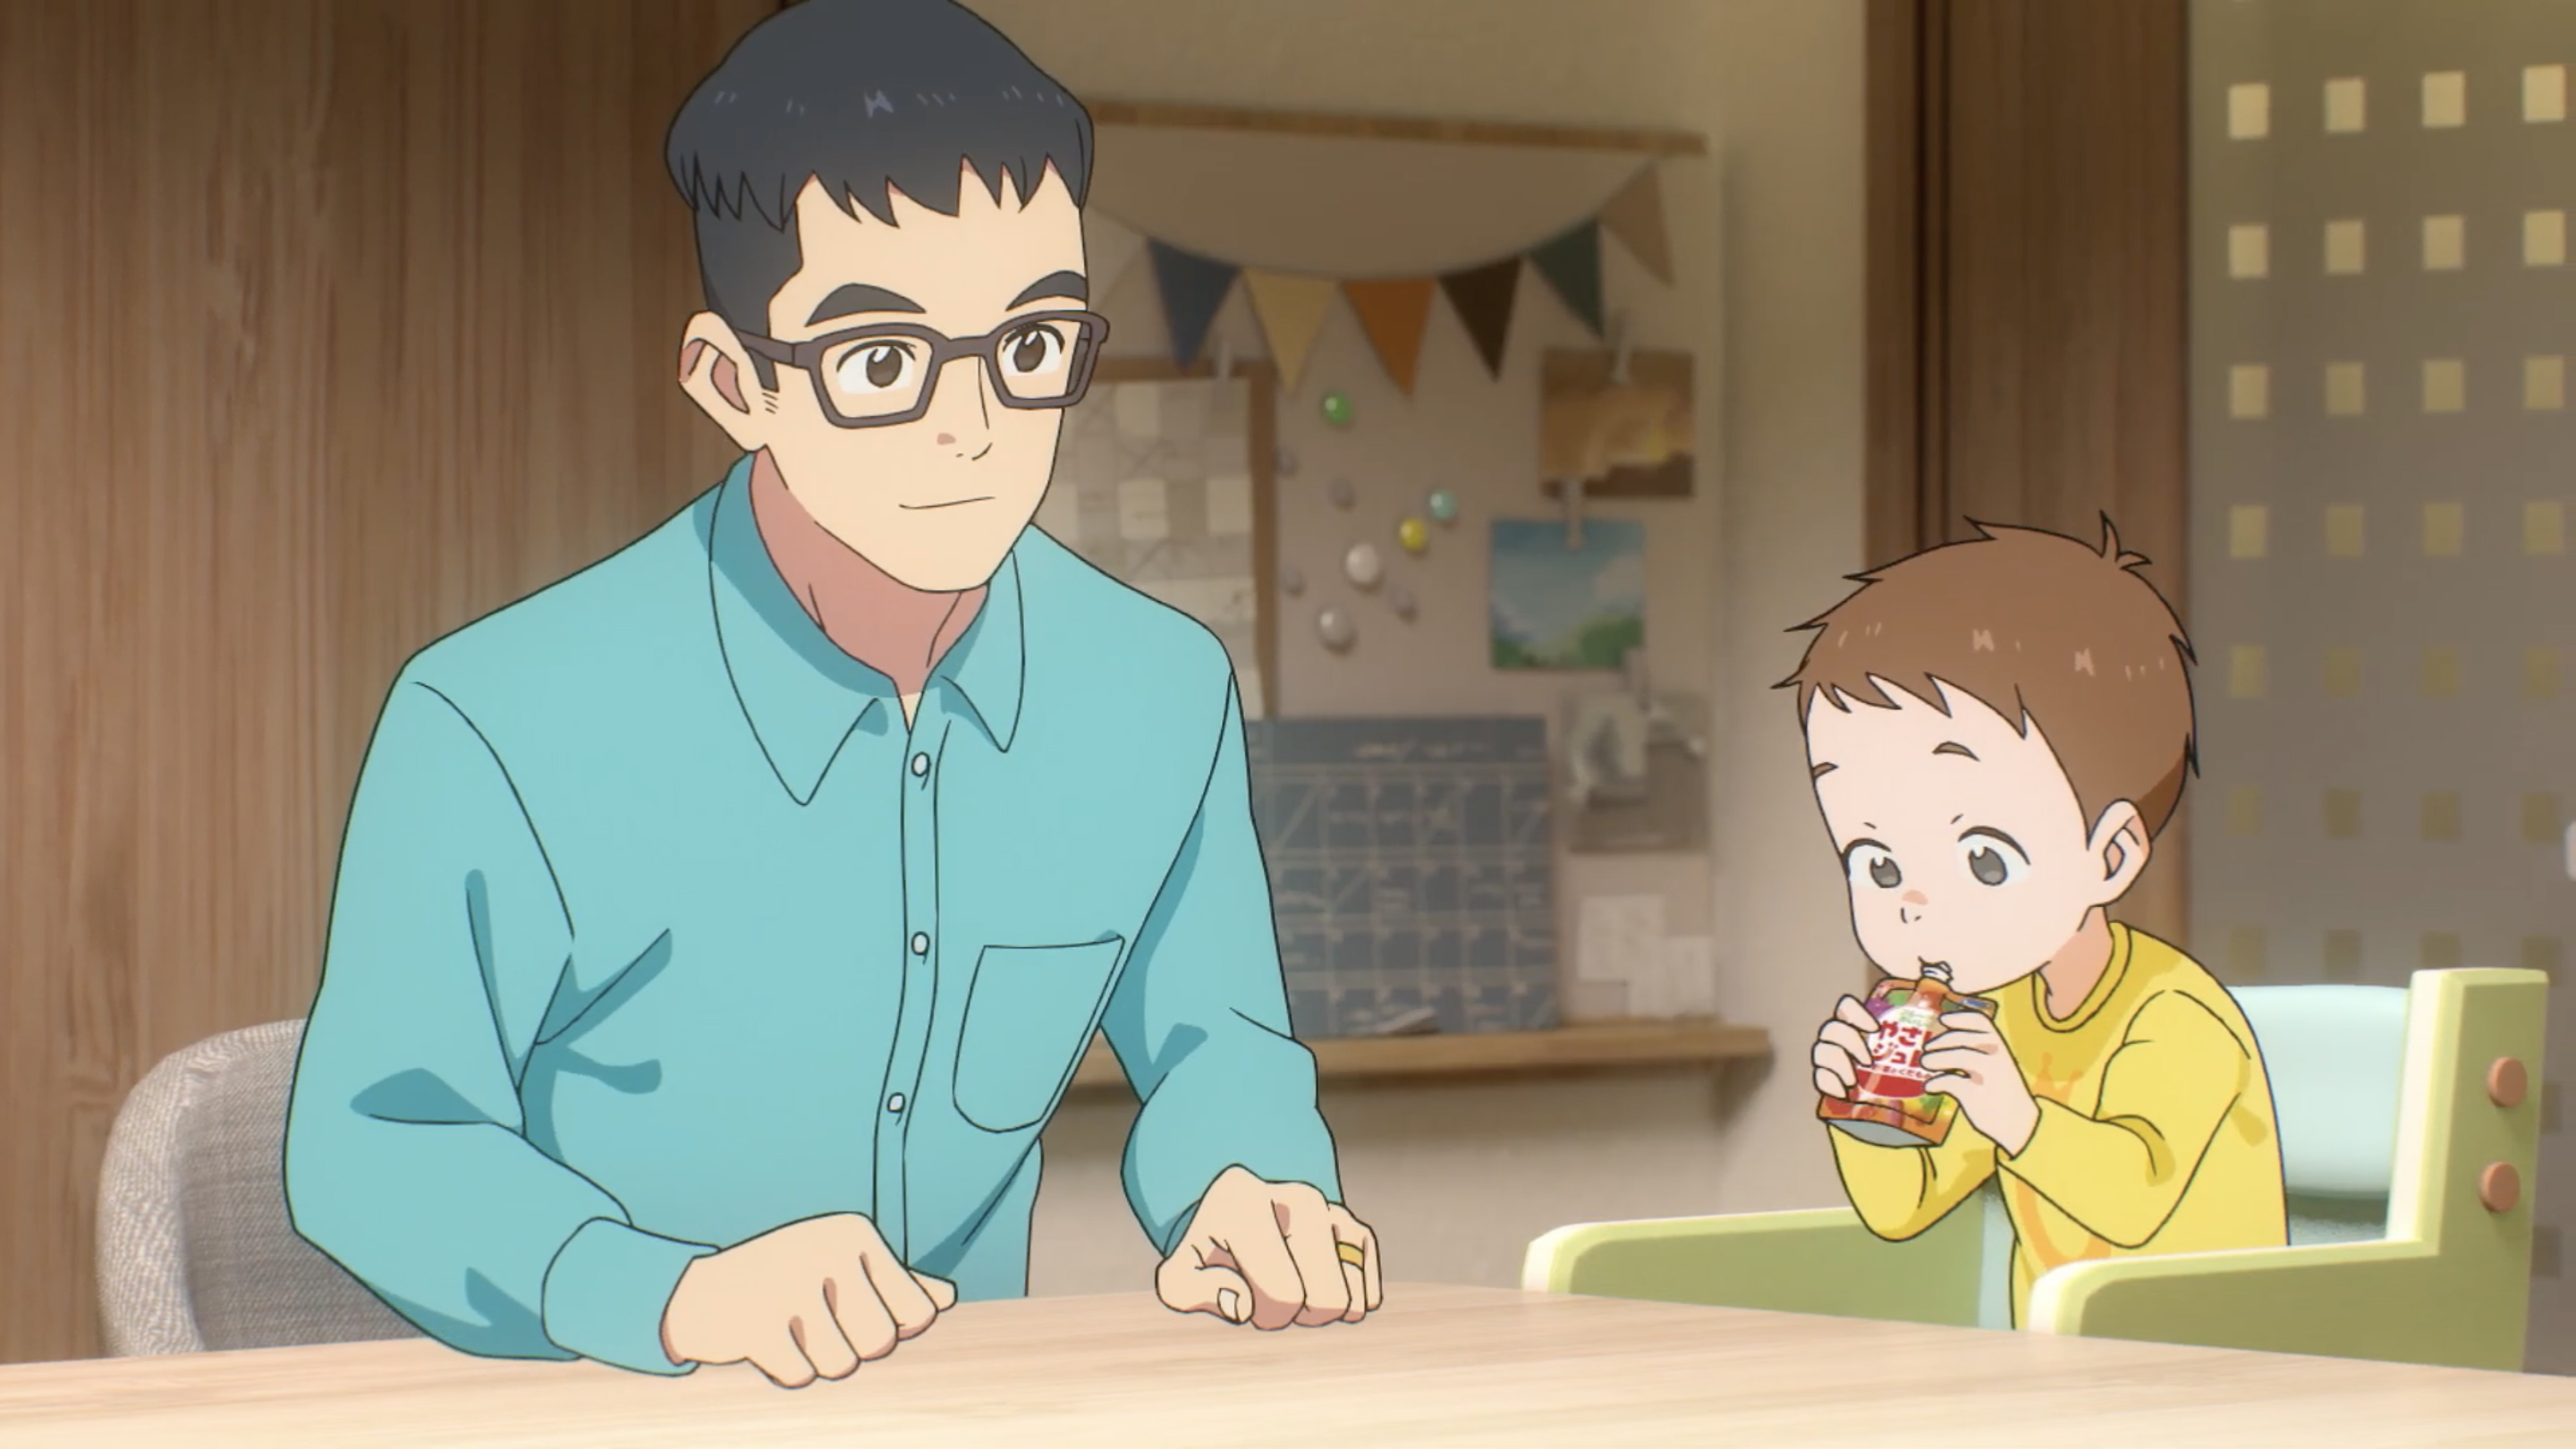 Crunchyroll - Weathering with You Animation Director Creates Adorable  Family-Based Anime CMs for Morinaga Milk